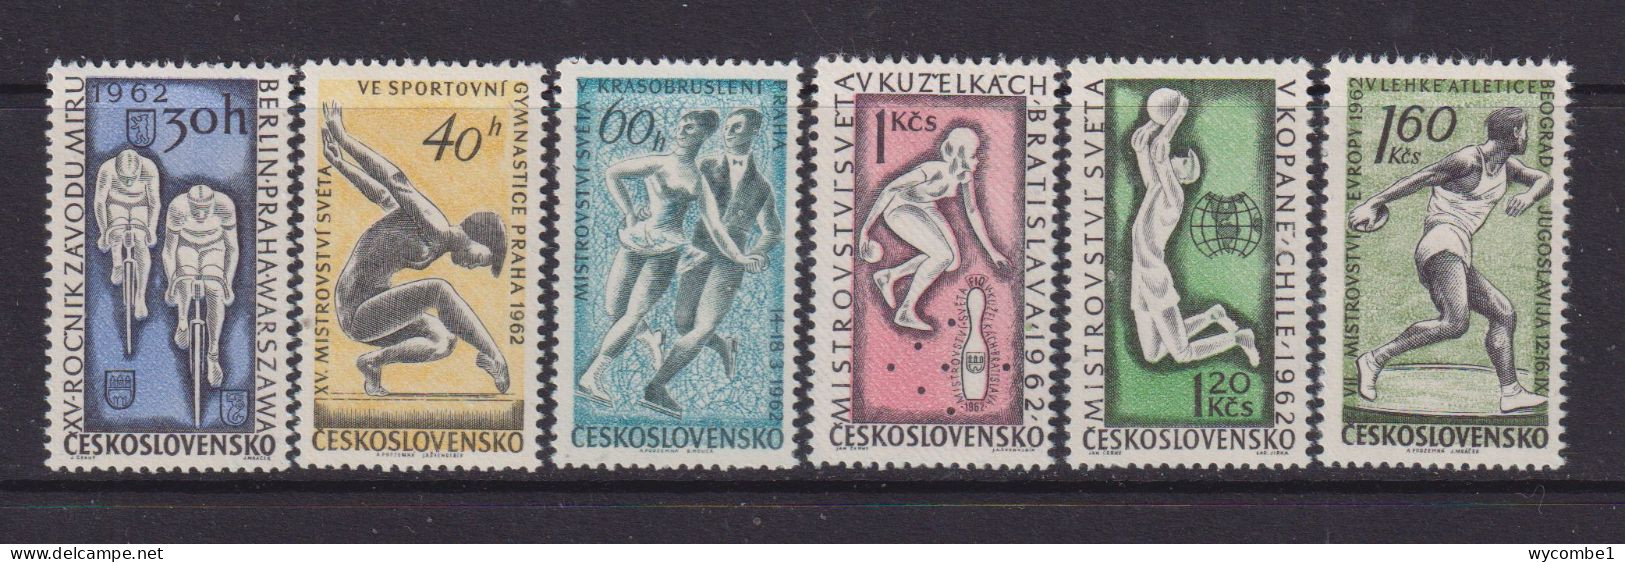 CZECHOSLOVAKIA  - 1962 Sports Events Set Never Hinged Mint - Nuevos